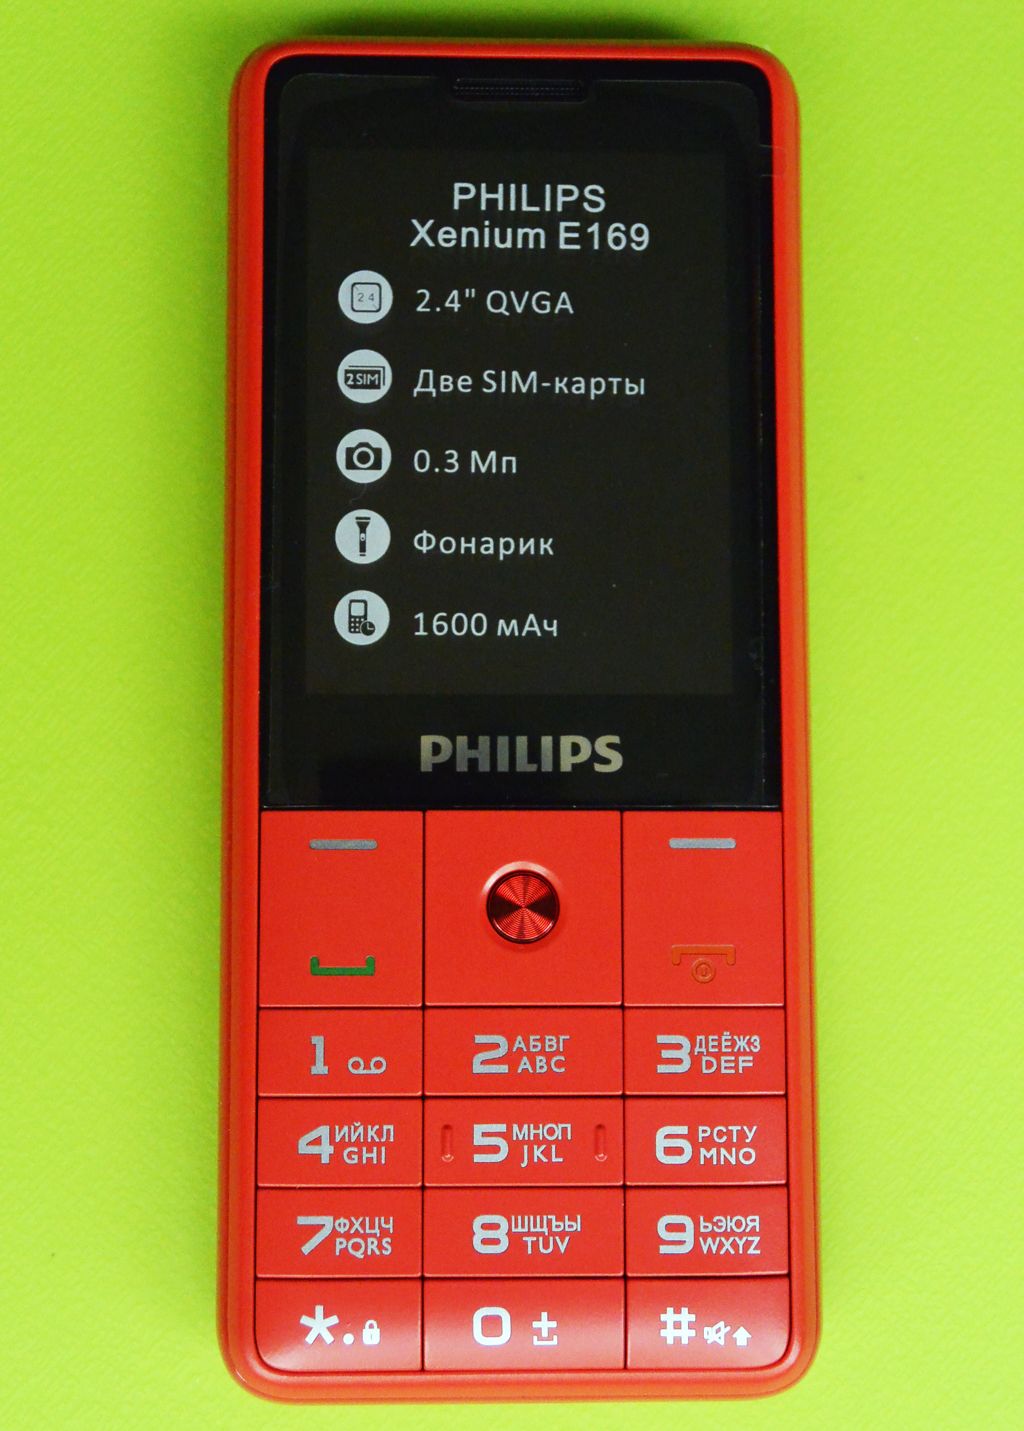 Xenium e207 купить. Philips Xenium e169. Philips e169 Xenium Red. Philips Xenium e169 (красный). Philips Xenium 169.